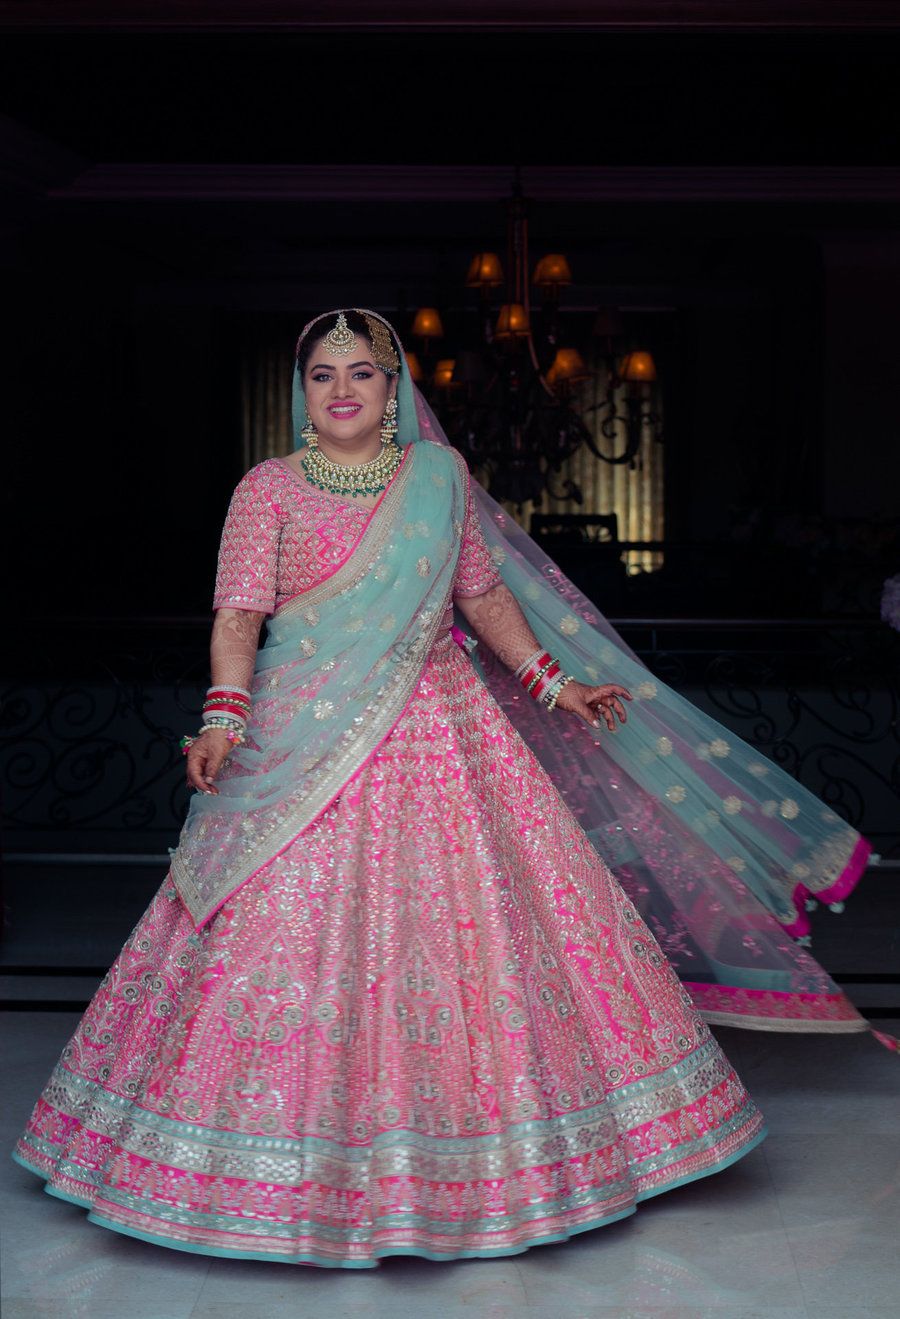 Chubby Body Type Plus Size Indian Wedding Dresses